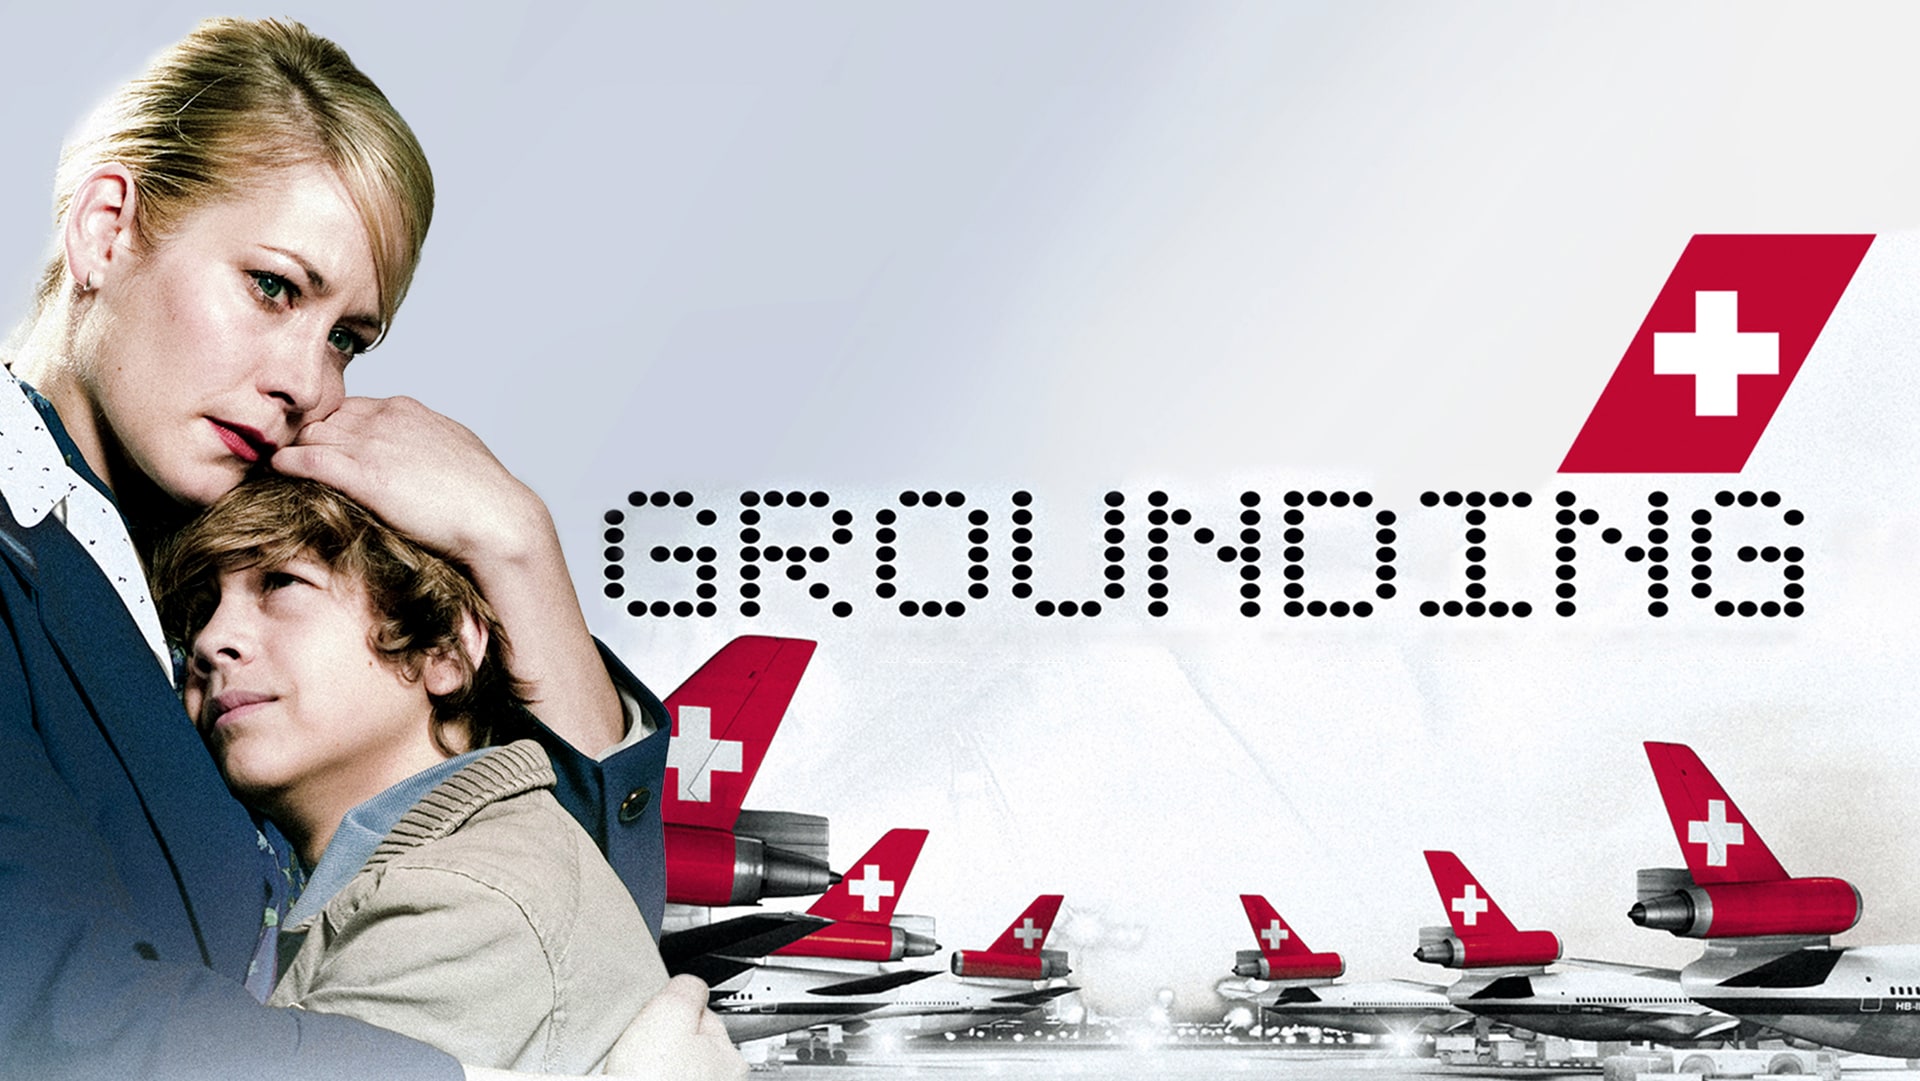 Grounding - Les derniers jours de Swissair